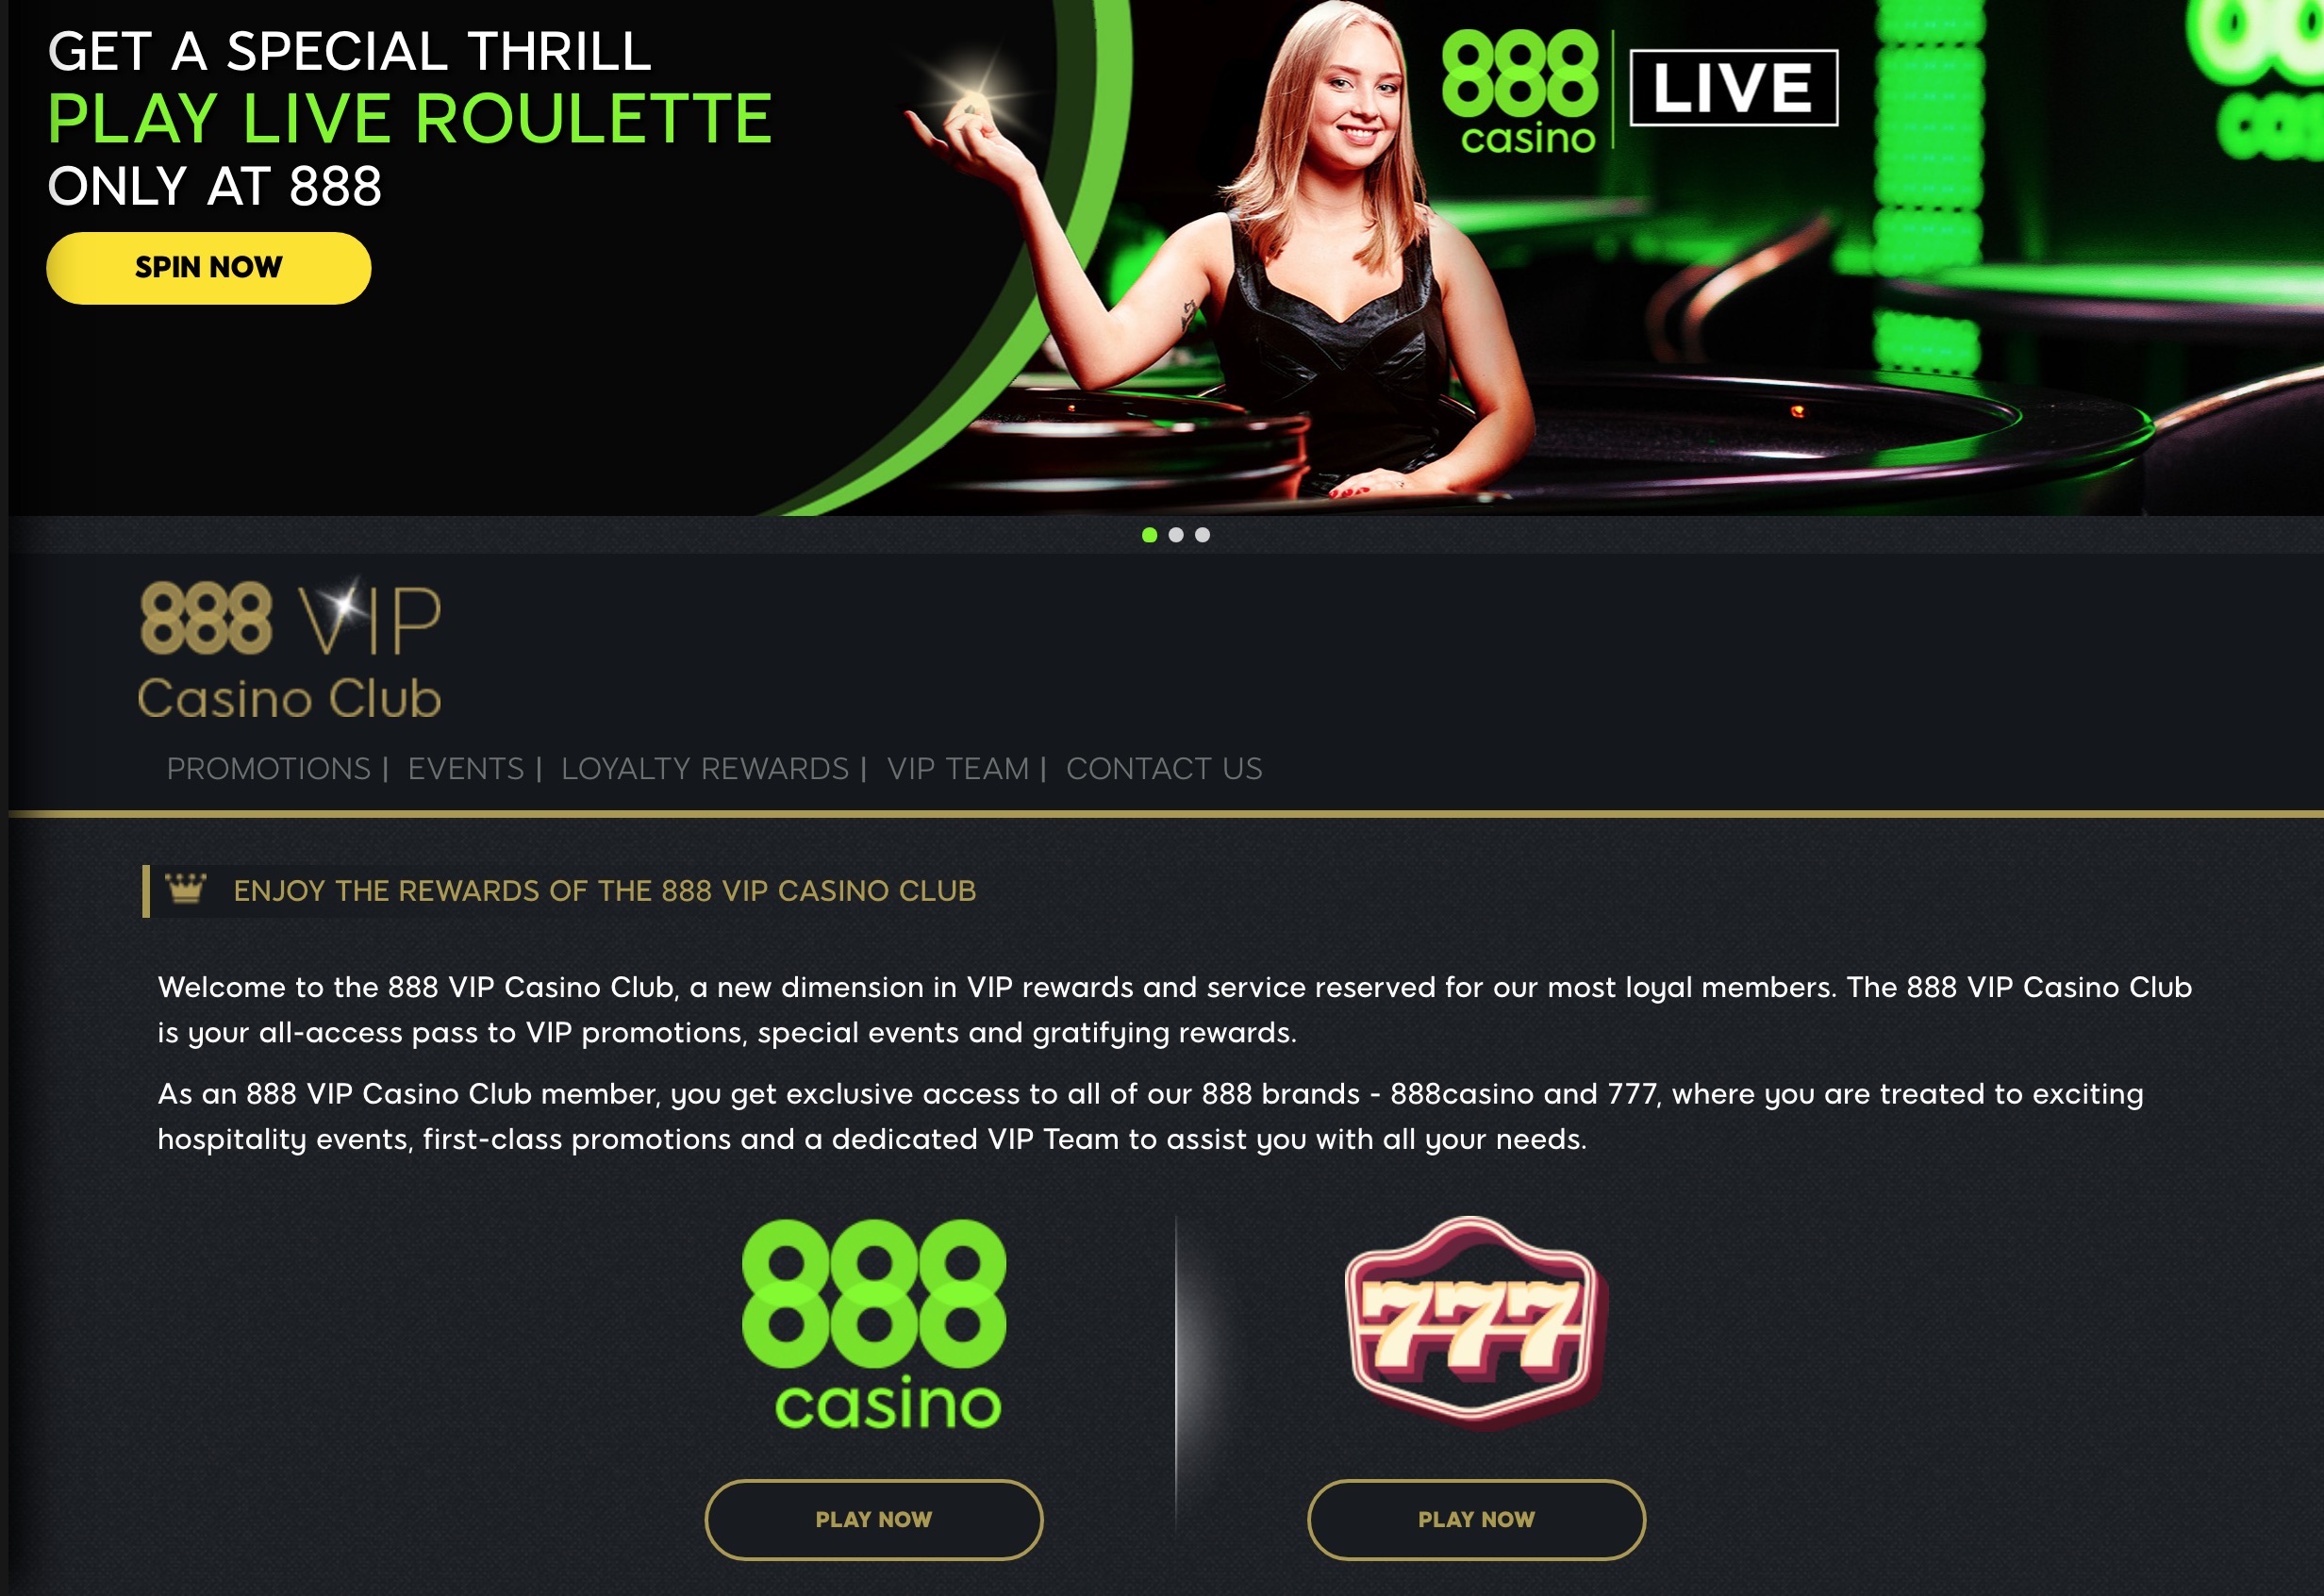 VIP Program at 888 Casino